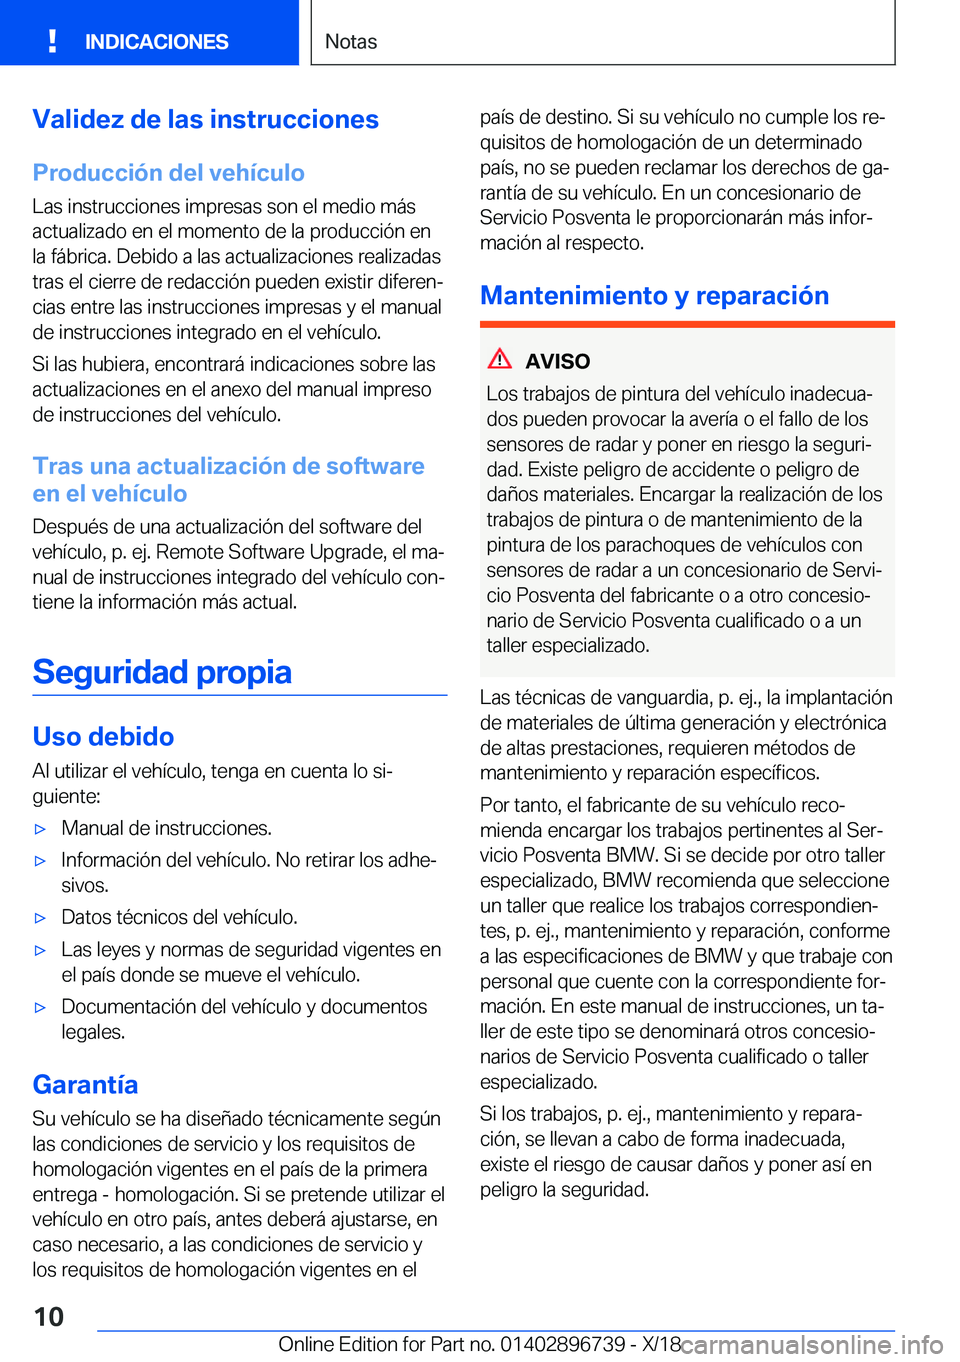 BMW X5 2019  Manuales de Empleo (in Spanish) �V�a�l�i�d�e�z��d�e��l�a�s��i�n�s�t�r�u�c�c�i�o�n�e�s�P�r�o�d�u�c�c�i�